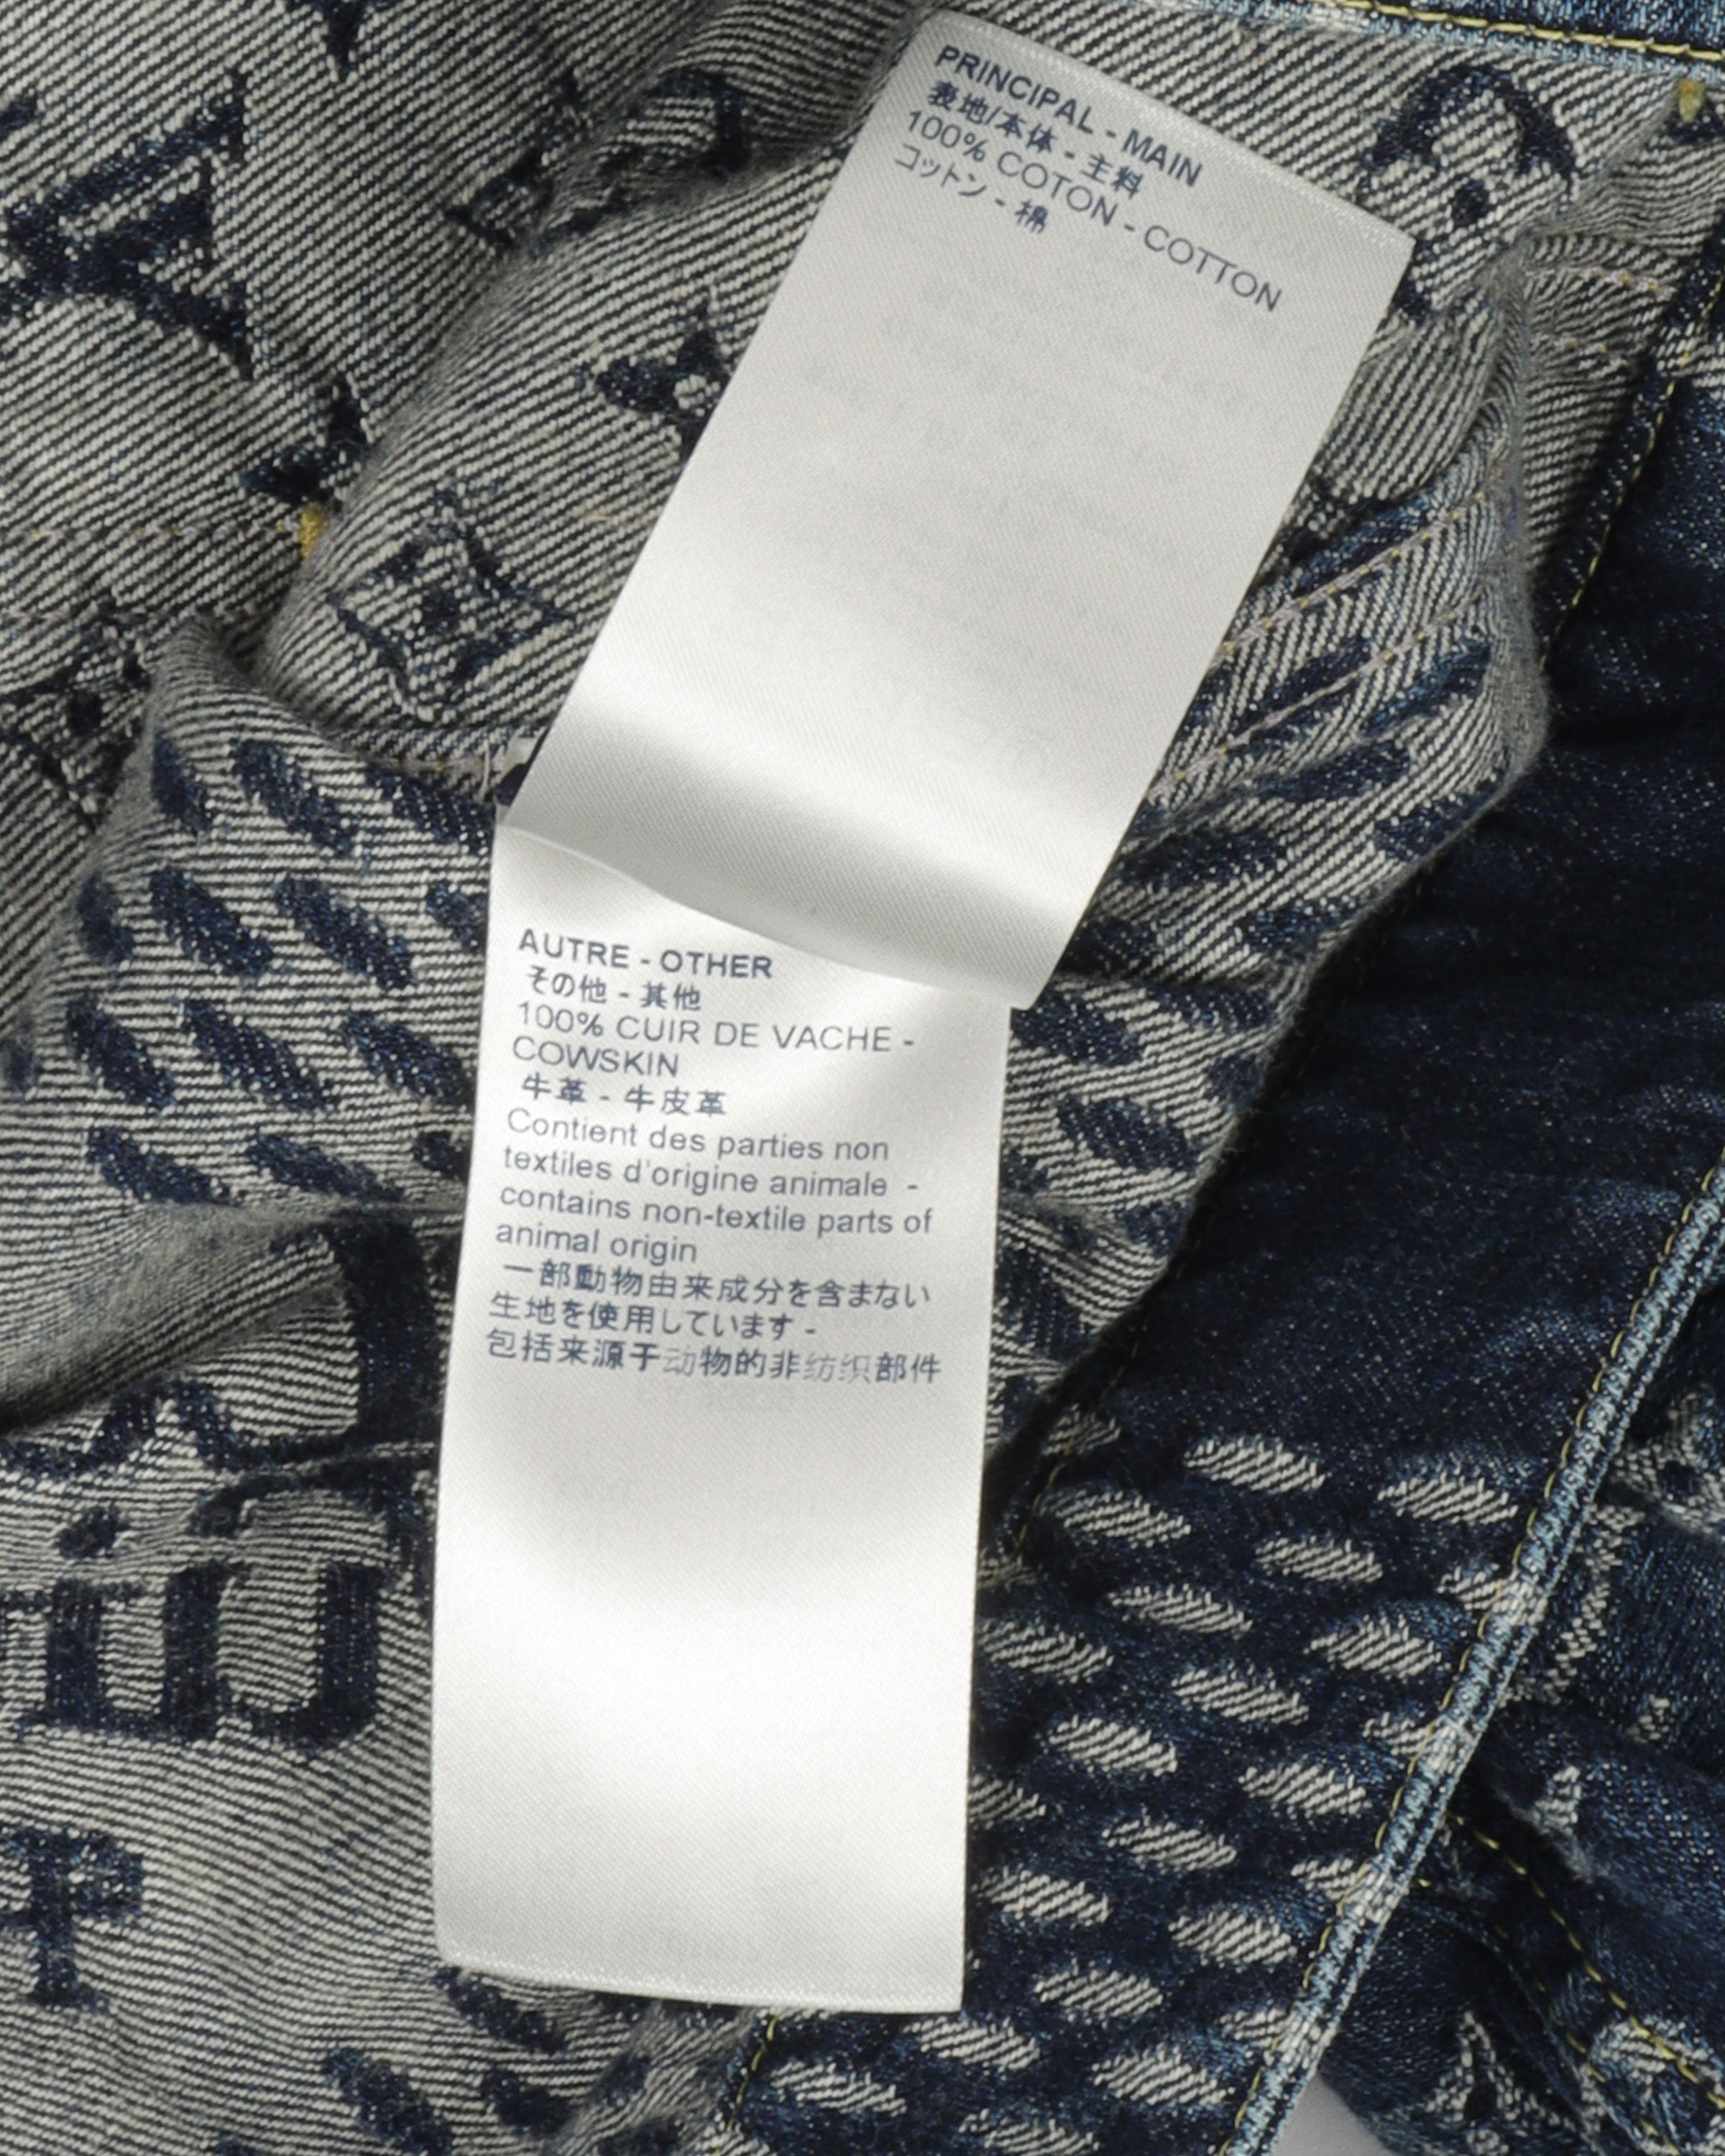 Louis Vuitton Human Made Denim Jacket